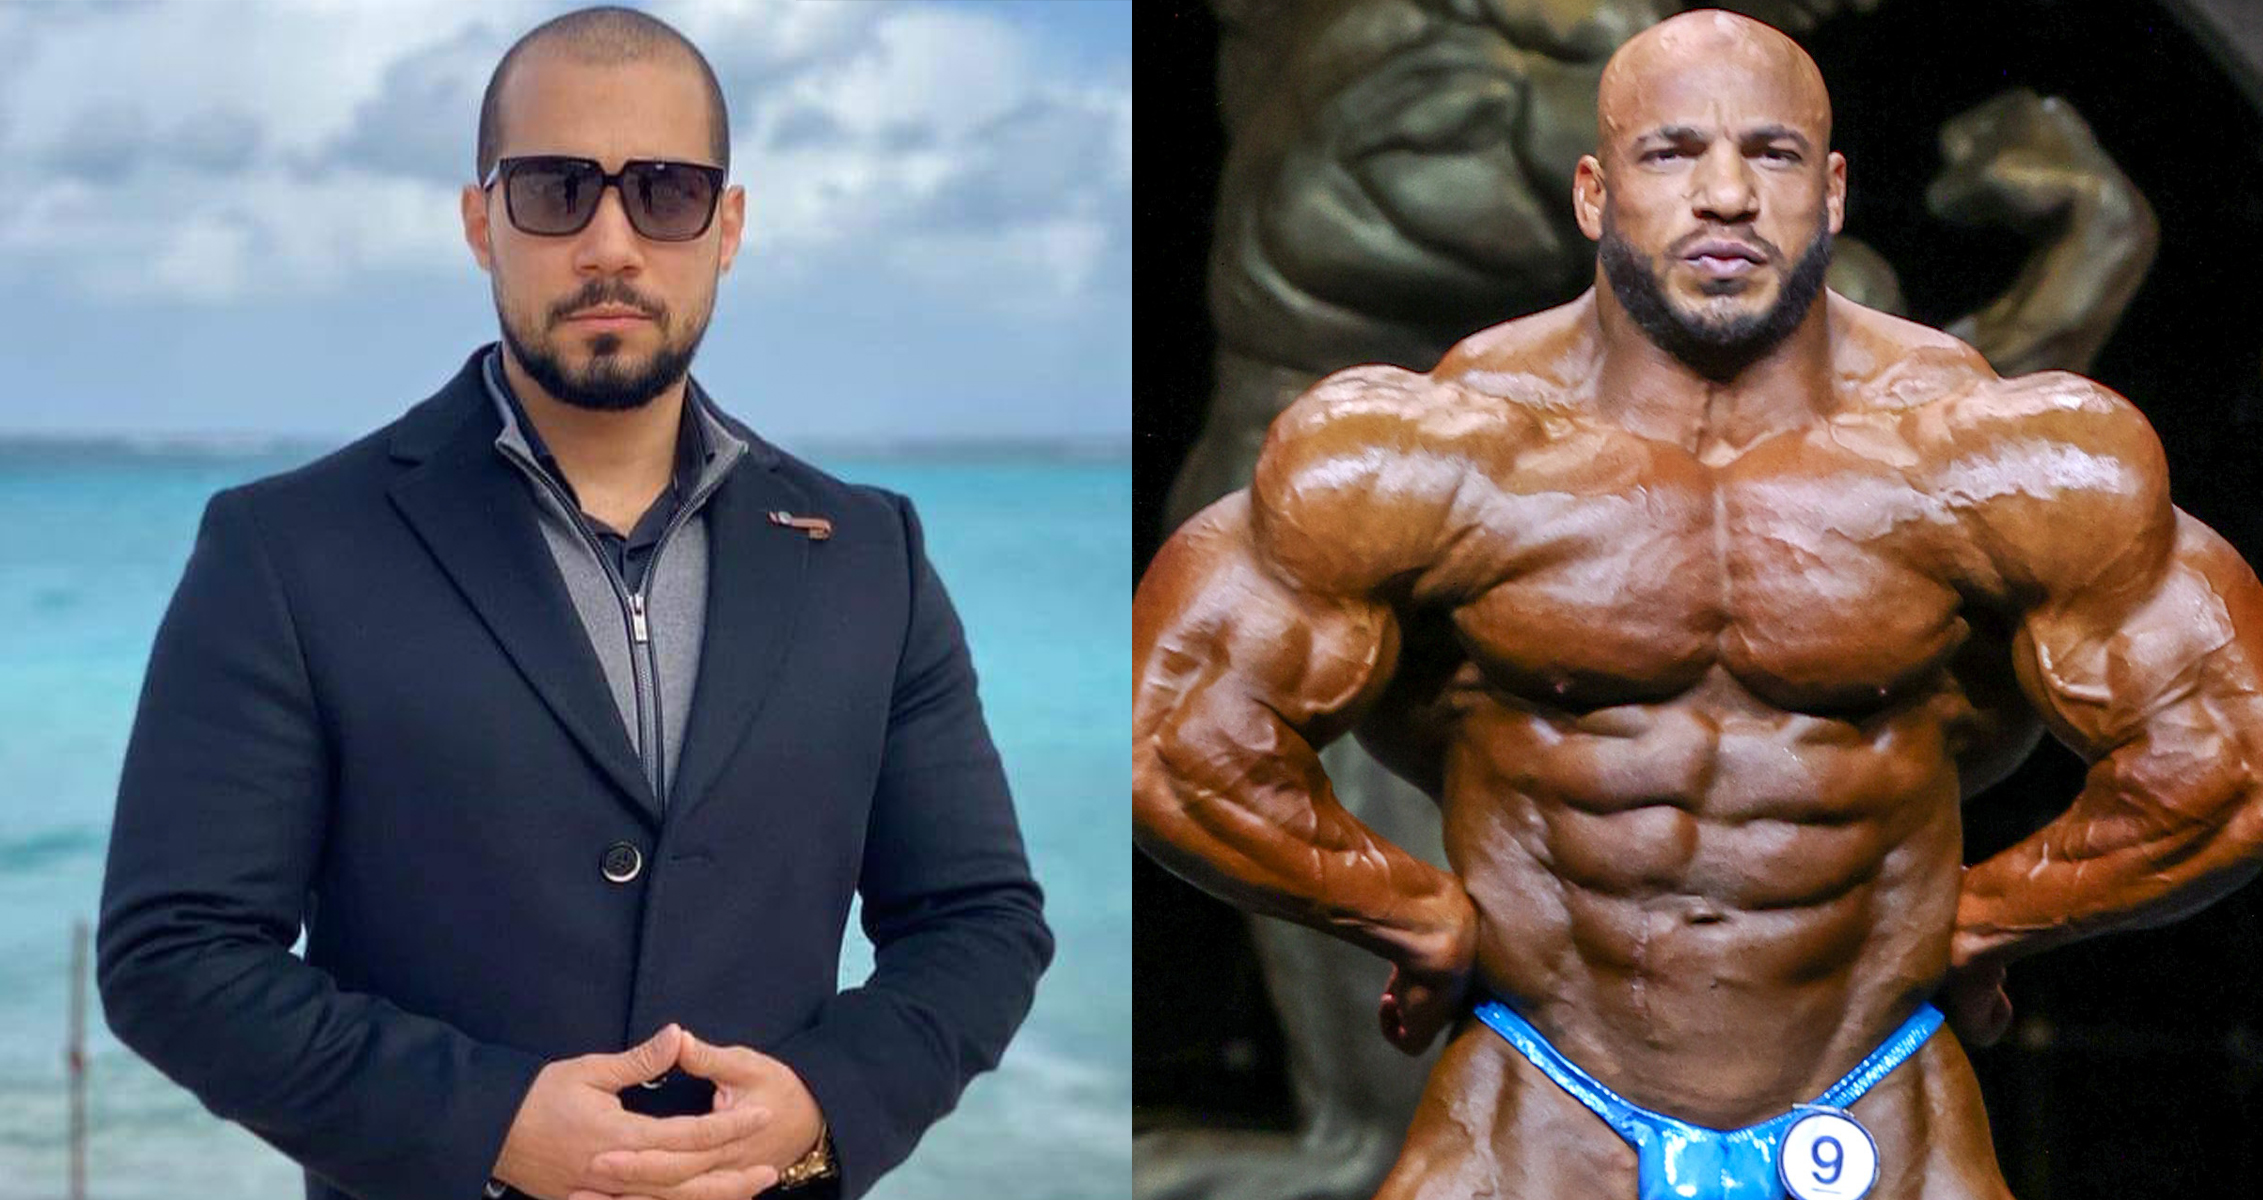 Egyptian-Preacher-Bodybuilding-Forbidden-Big-Ramy.jpg